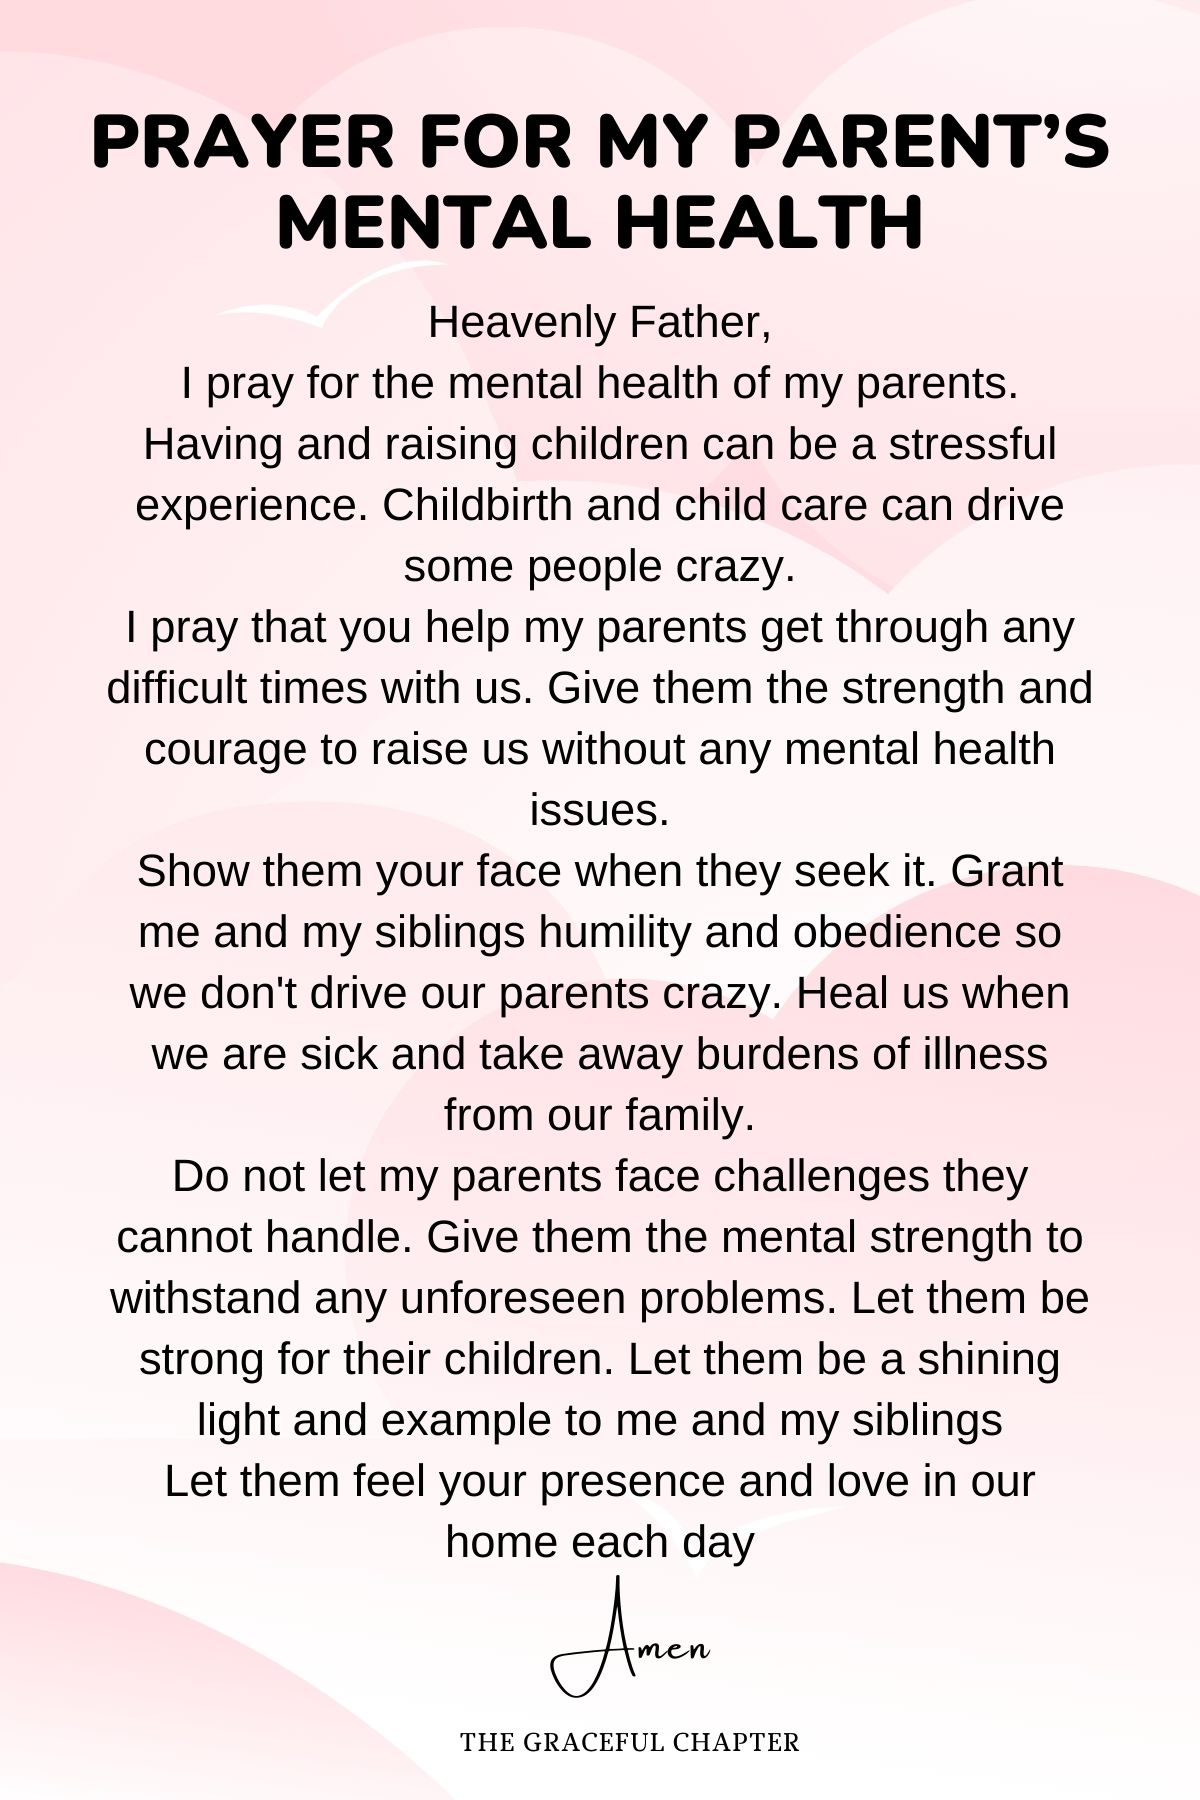 Prayer for my parent’s mental health